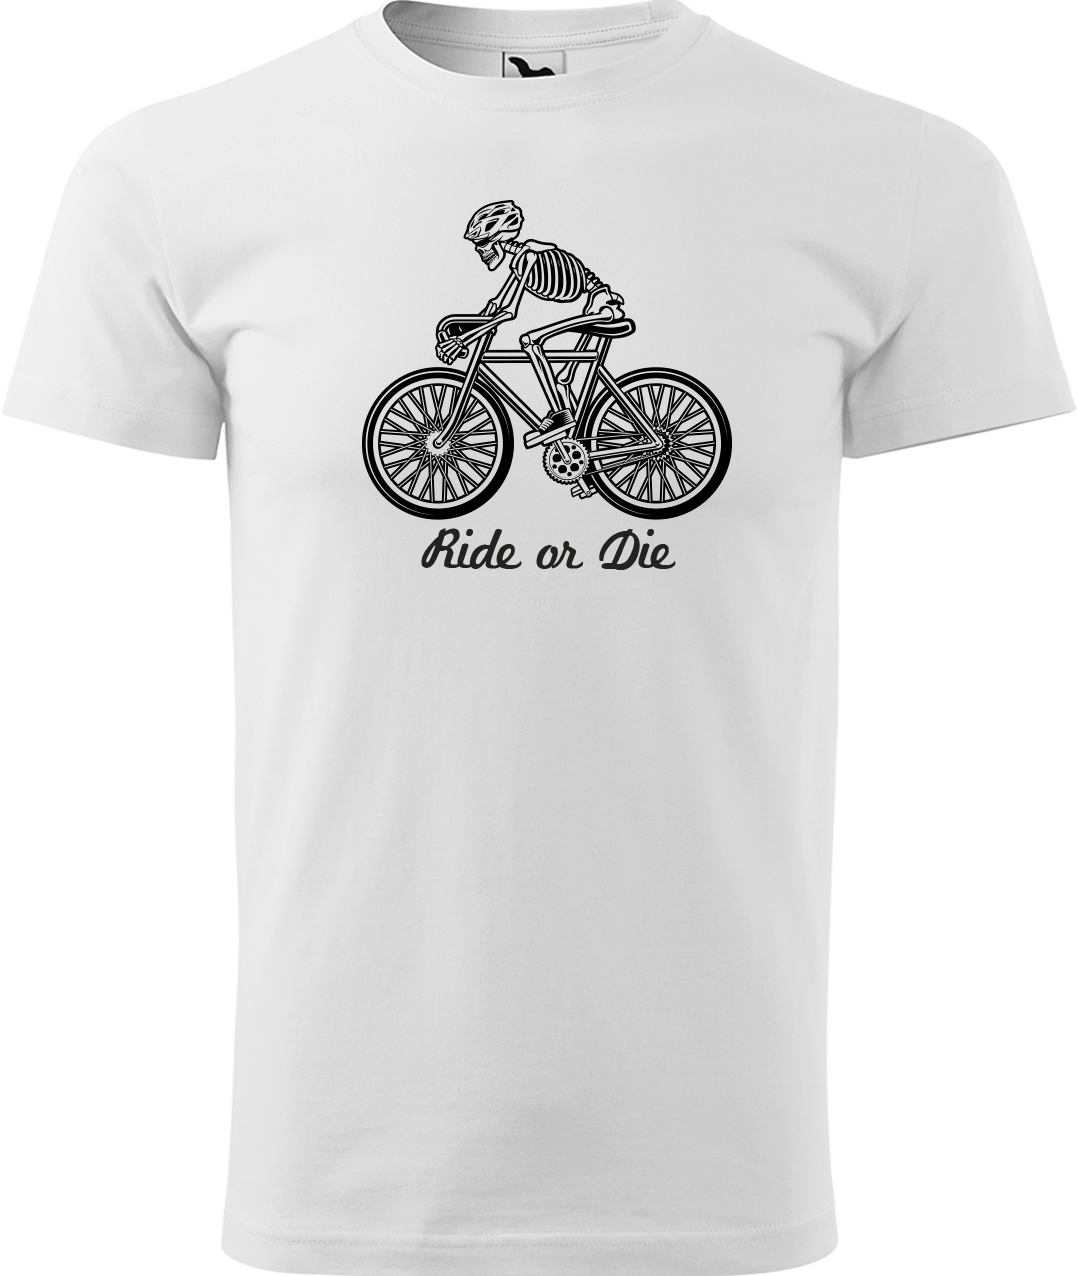 Pánské tričko pro cyklistu - Ride or Die Velikost: M, Barva: Bílá (00)